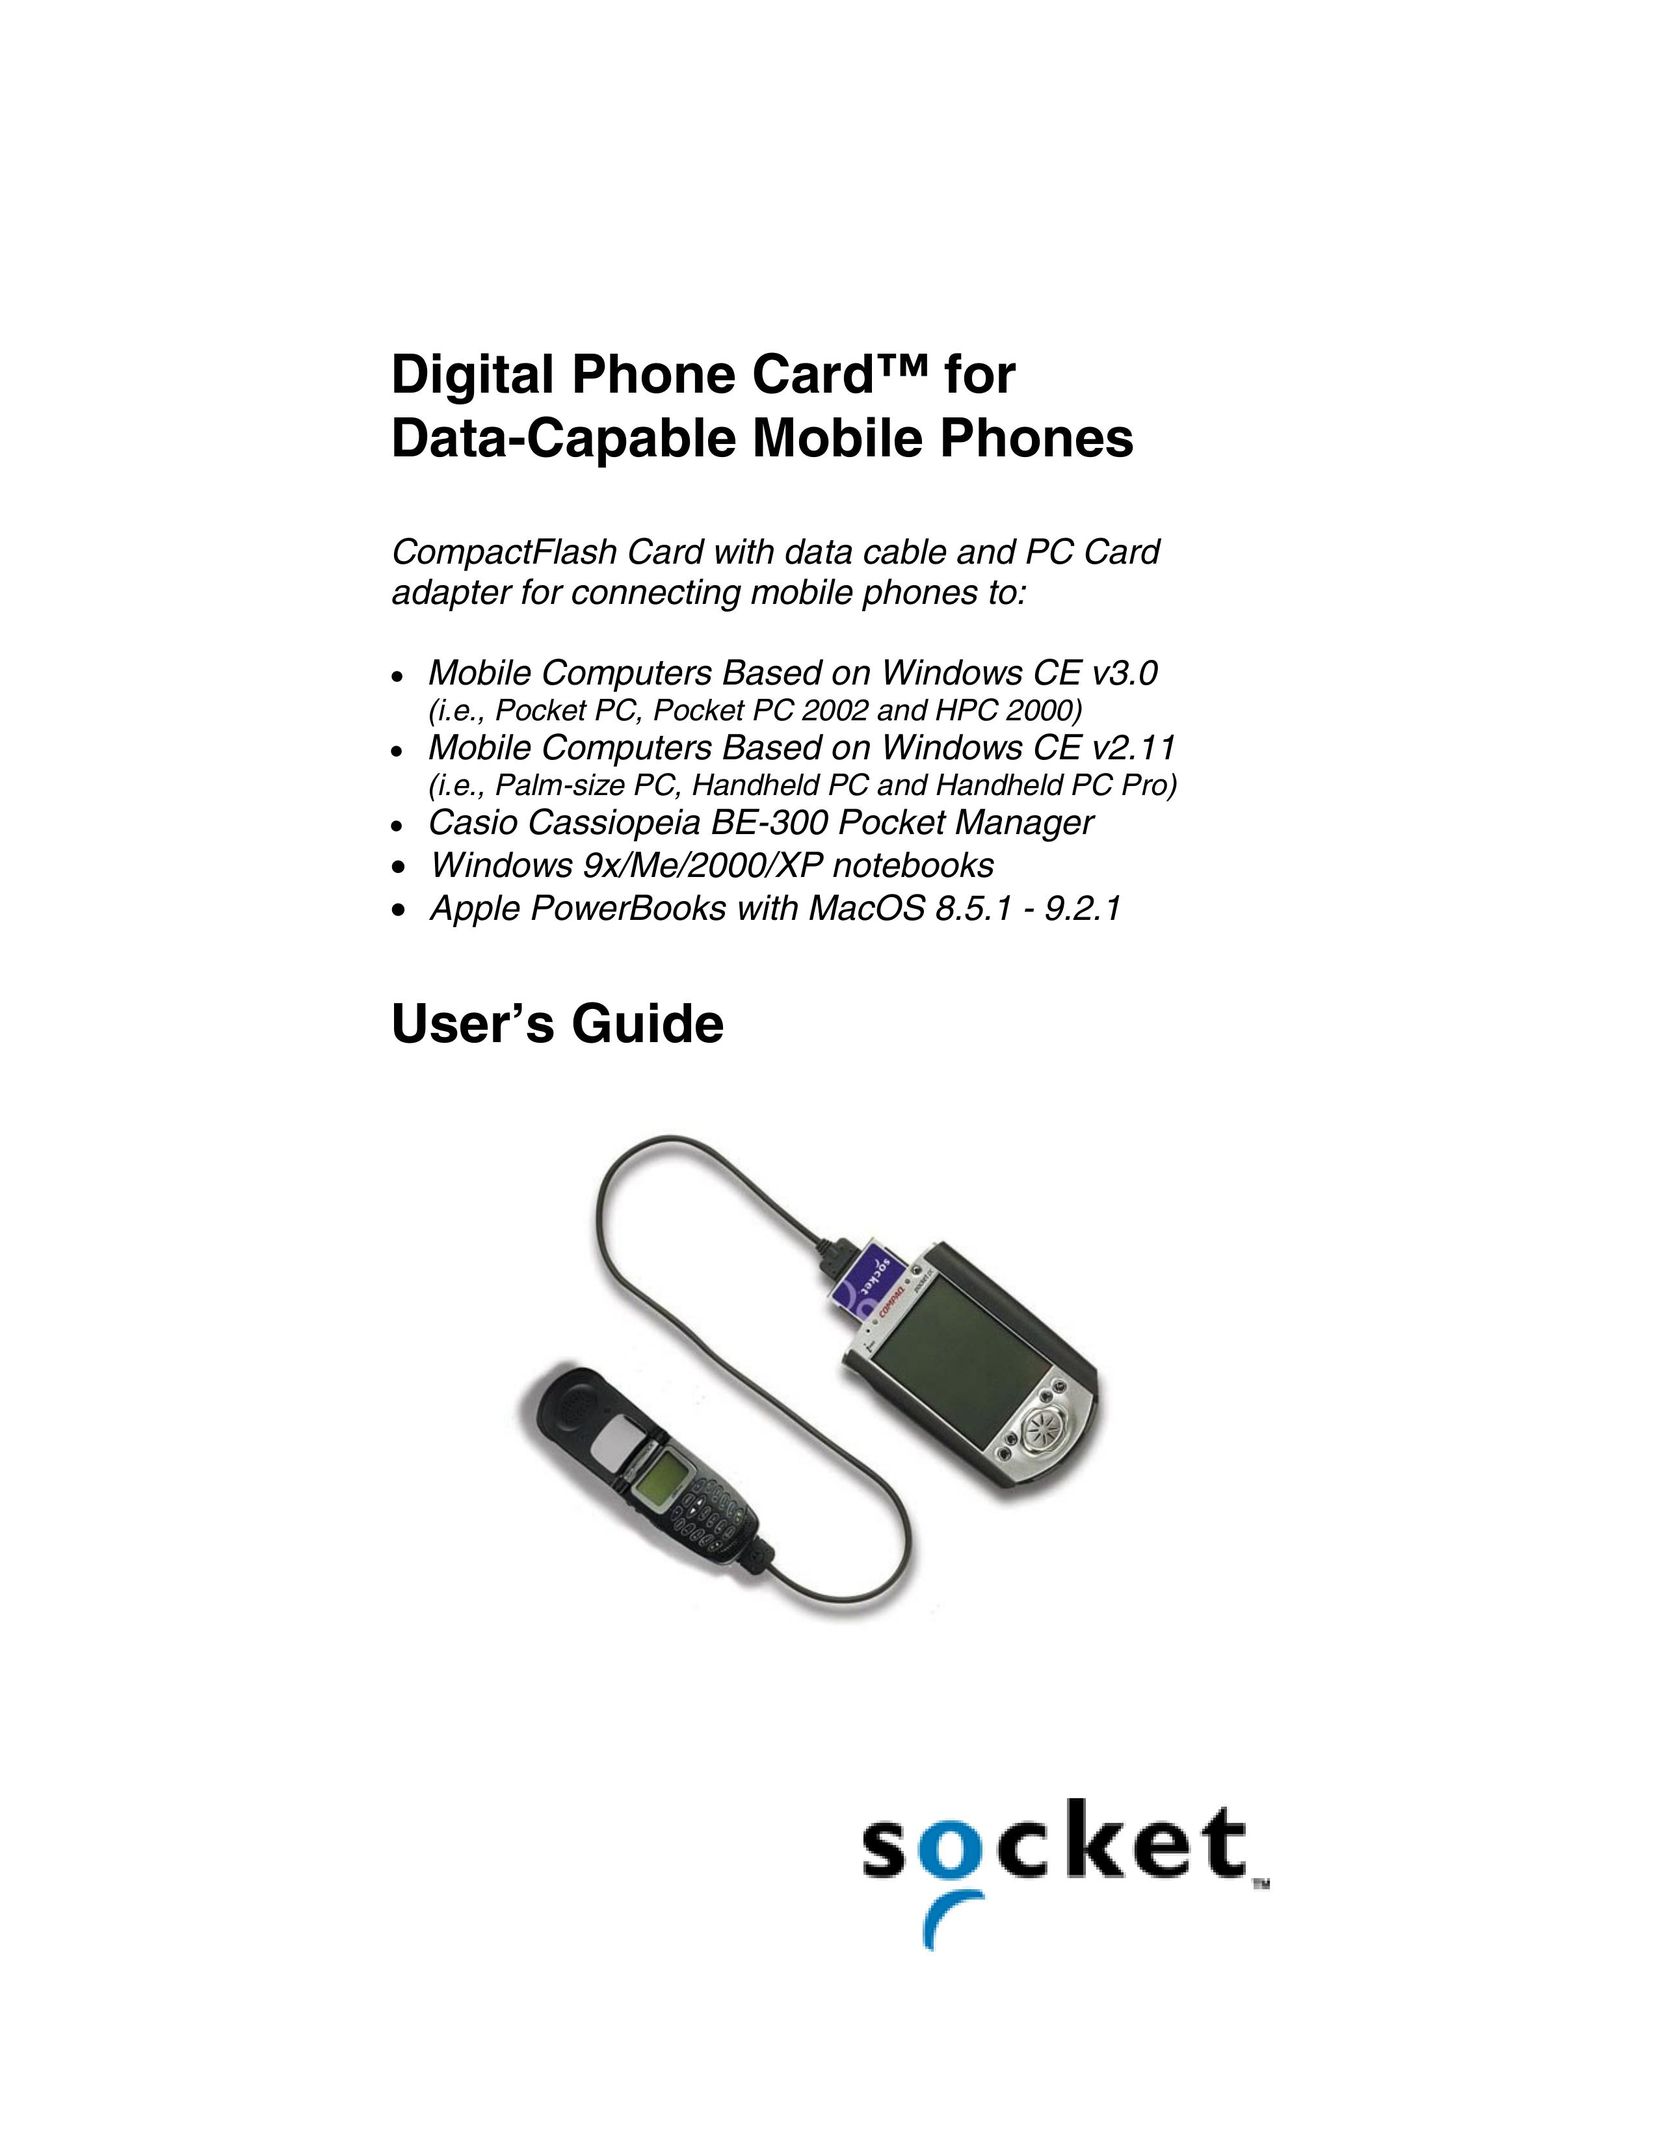 Socket Mobile Digital Phone Card for Data-Capable Mobile Phone Network Card User Manual